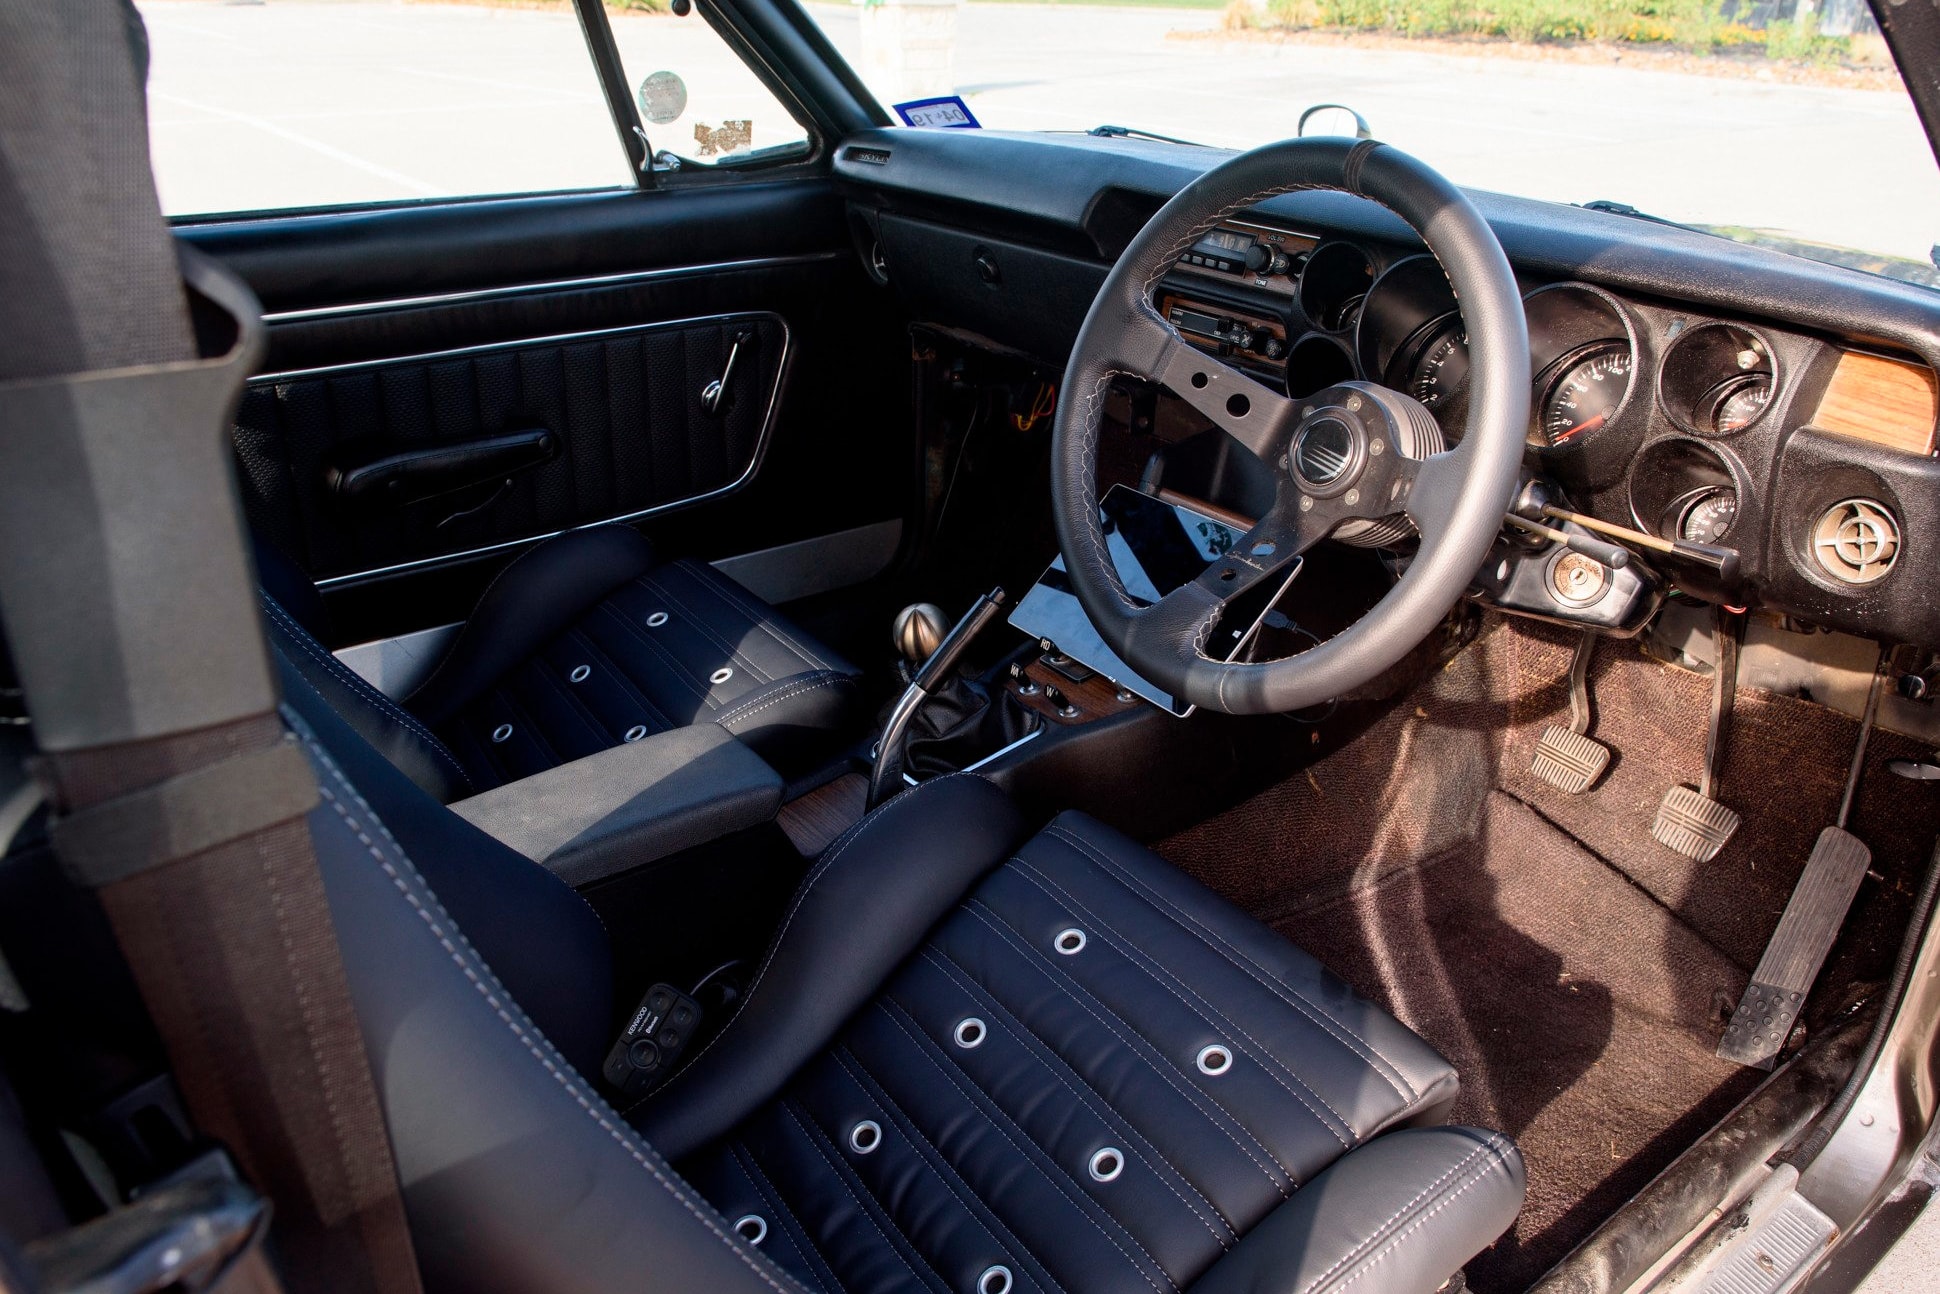 1972 Nissan Skyline C10 Vintage Car Auction sports car resto mod road ready classic automobile